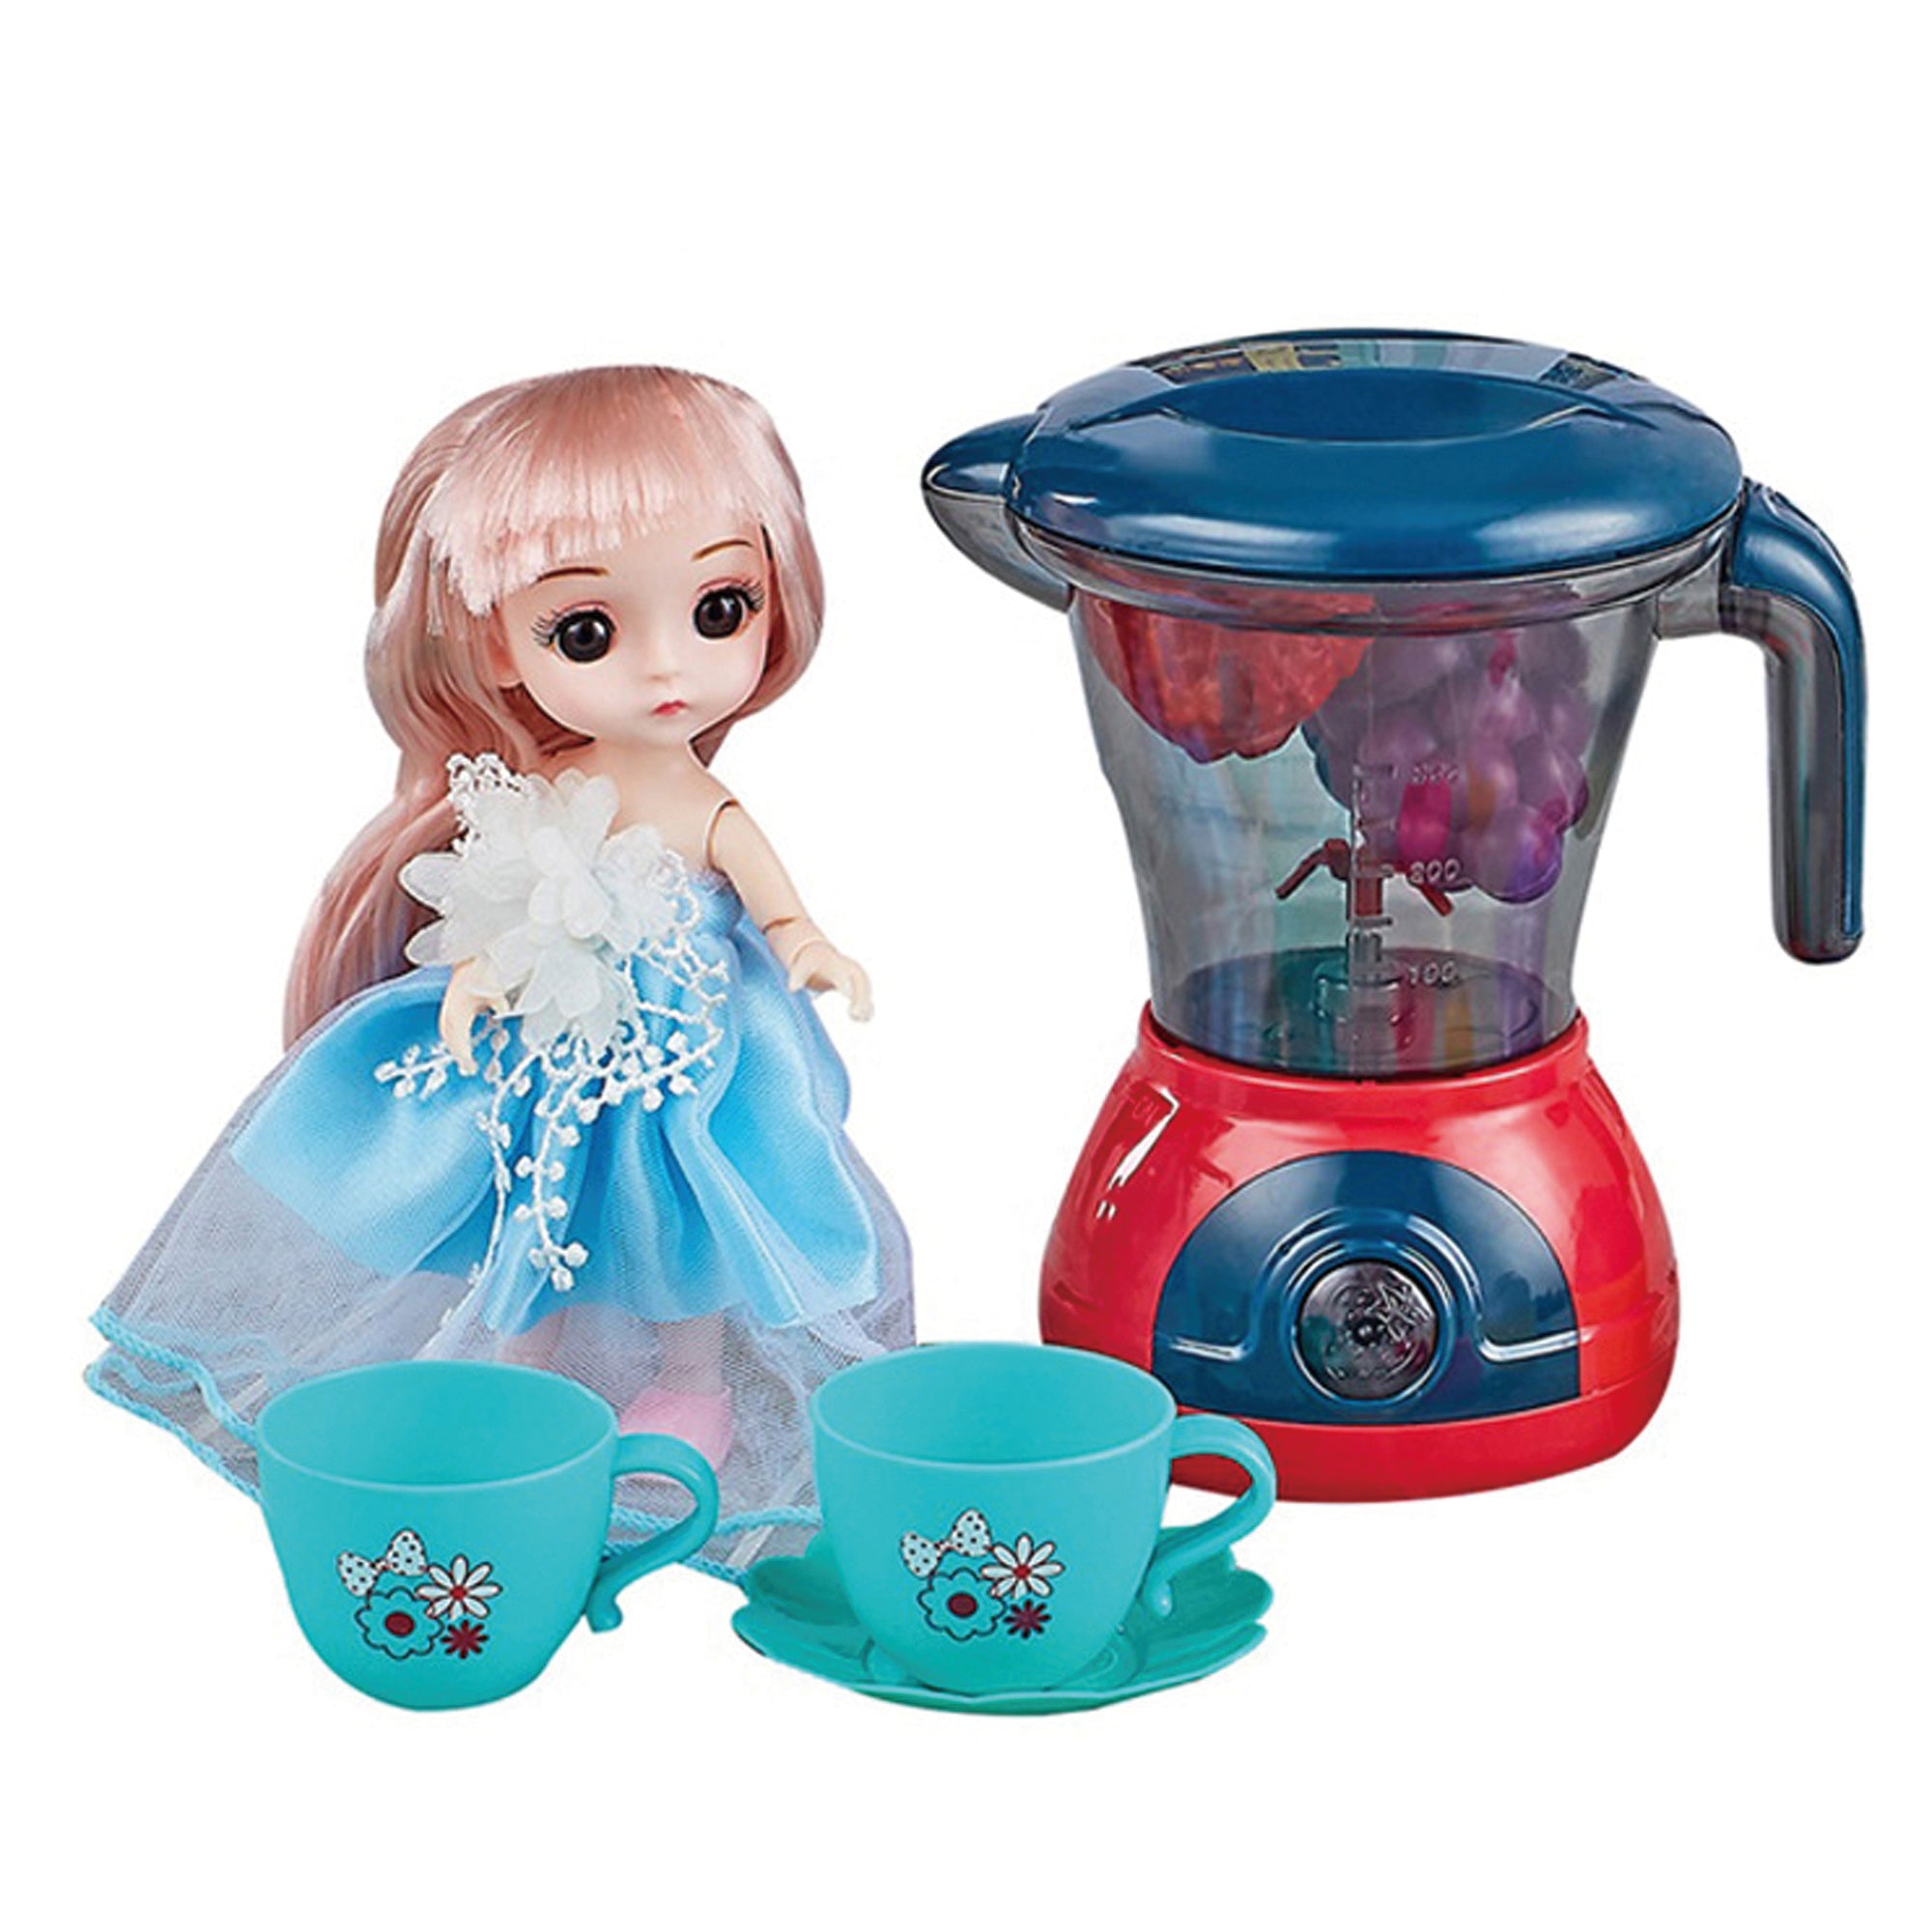 Coo11 Blender Toy for Kids, Kitchen Accessories Pretend Play Appliance –  uiilo